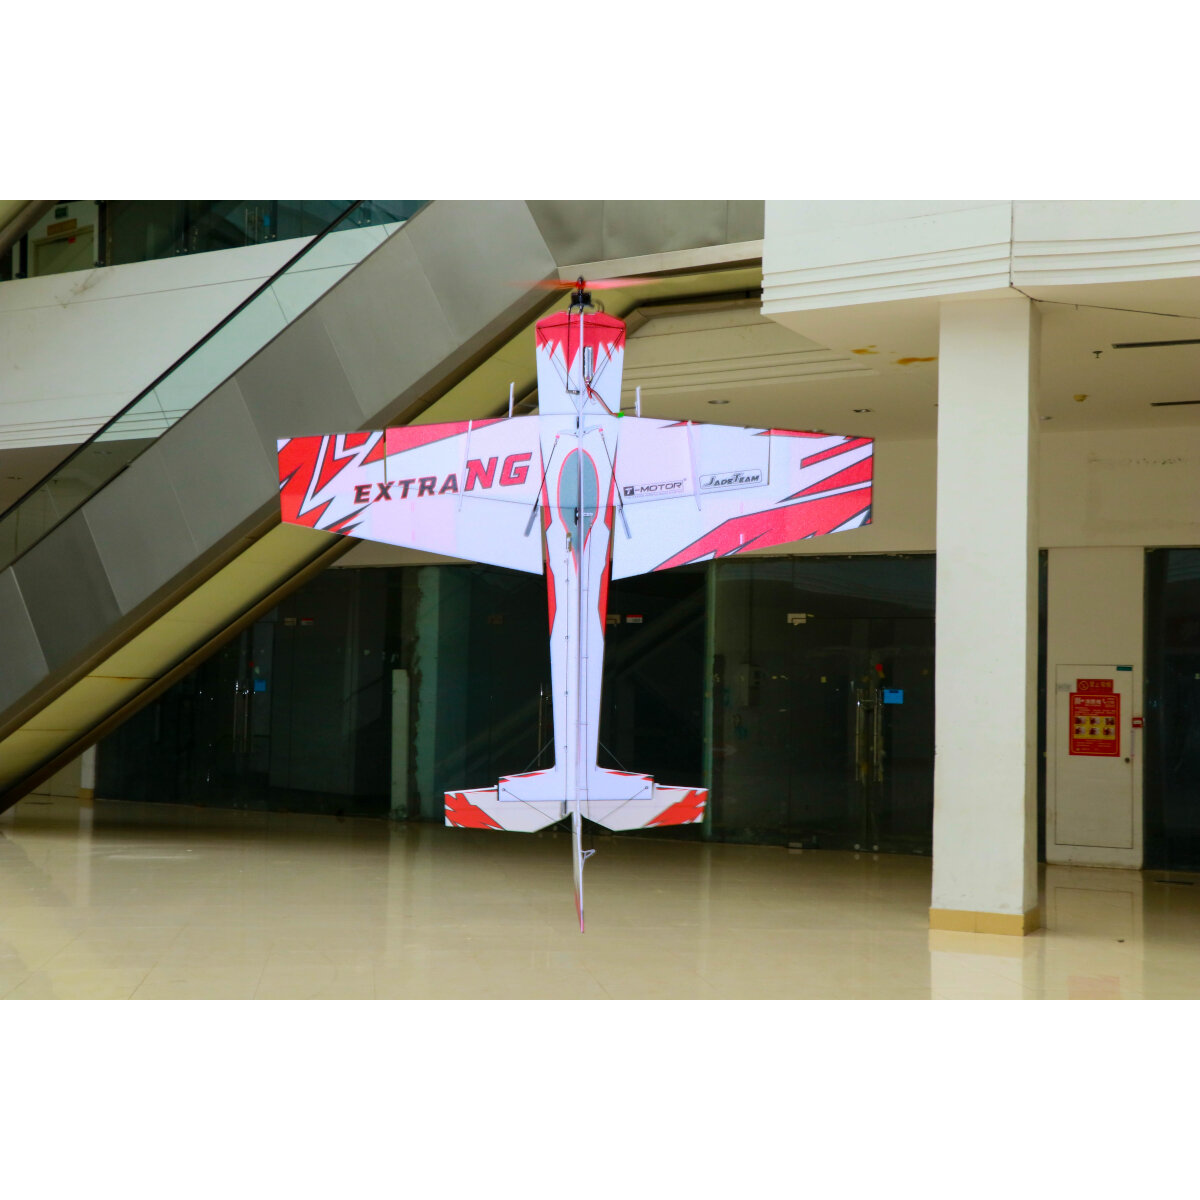 T-motor&Jade Team EXTRA NG 3D 840mm Wingspan 4mm EPP RC Airplane KIT